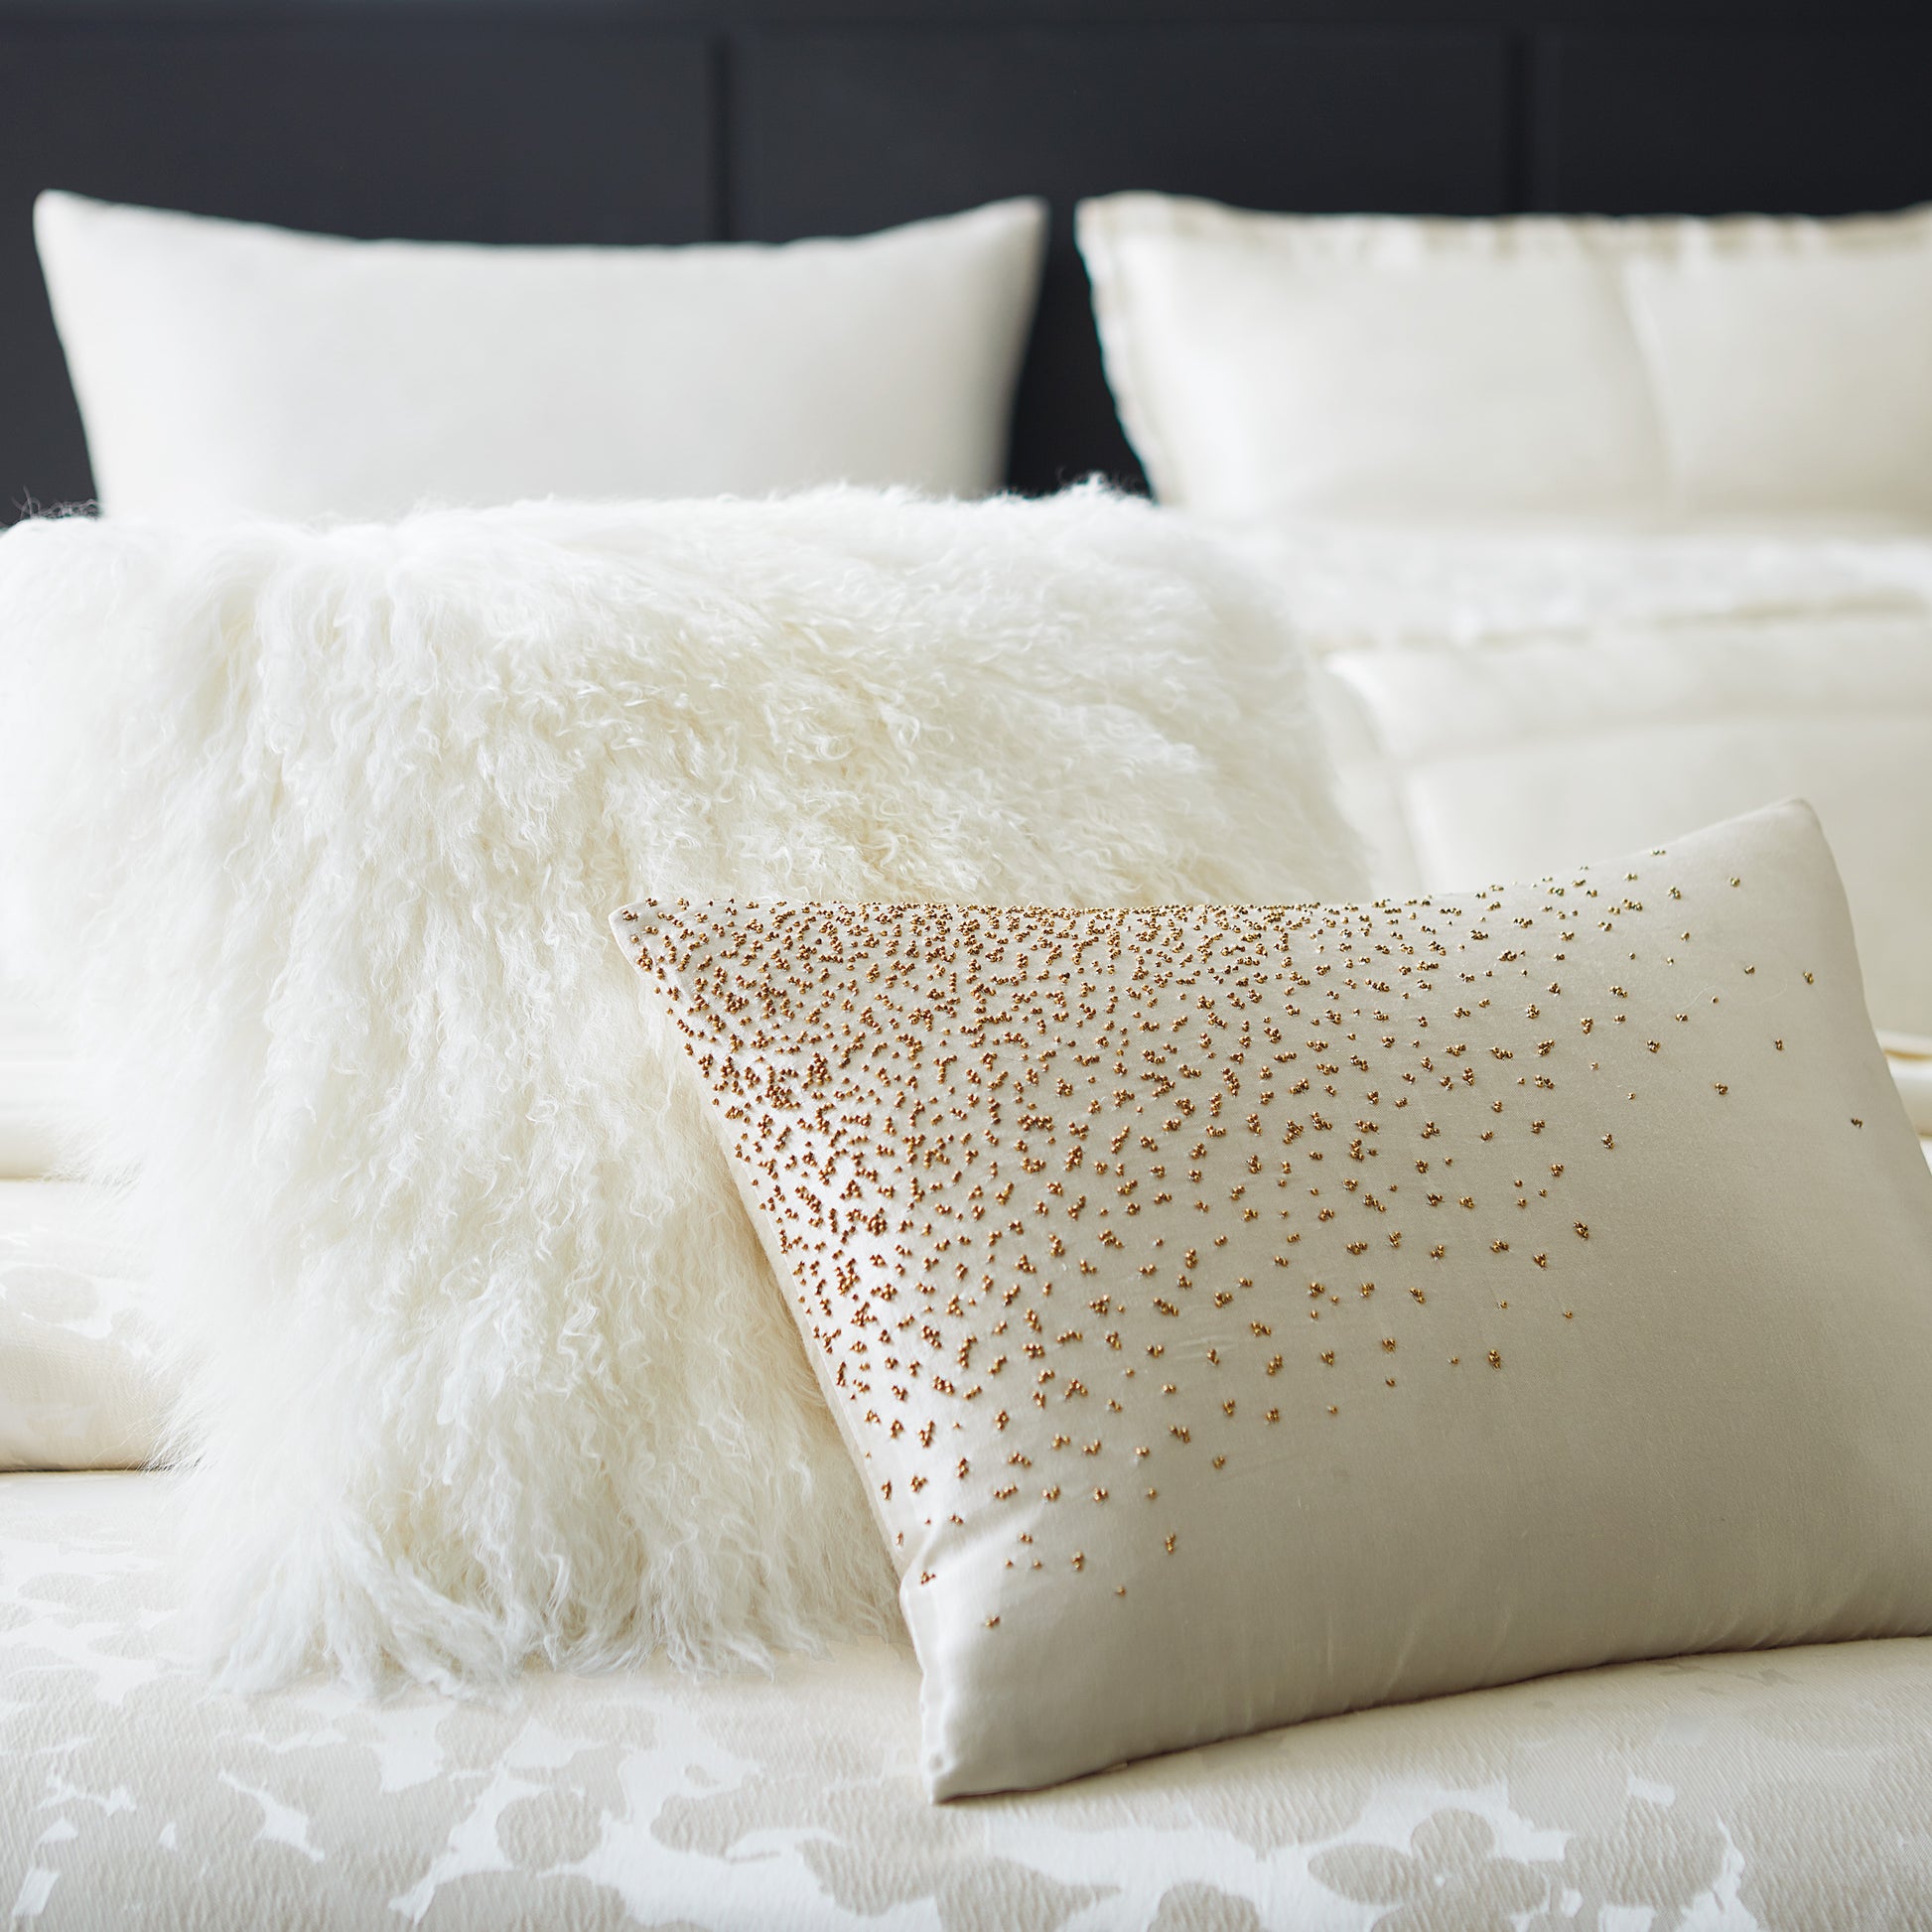 Donna Karan Aura Bedding Collection Decorative Pillow